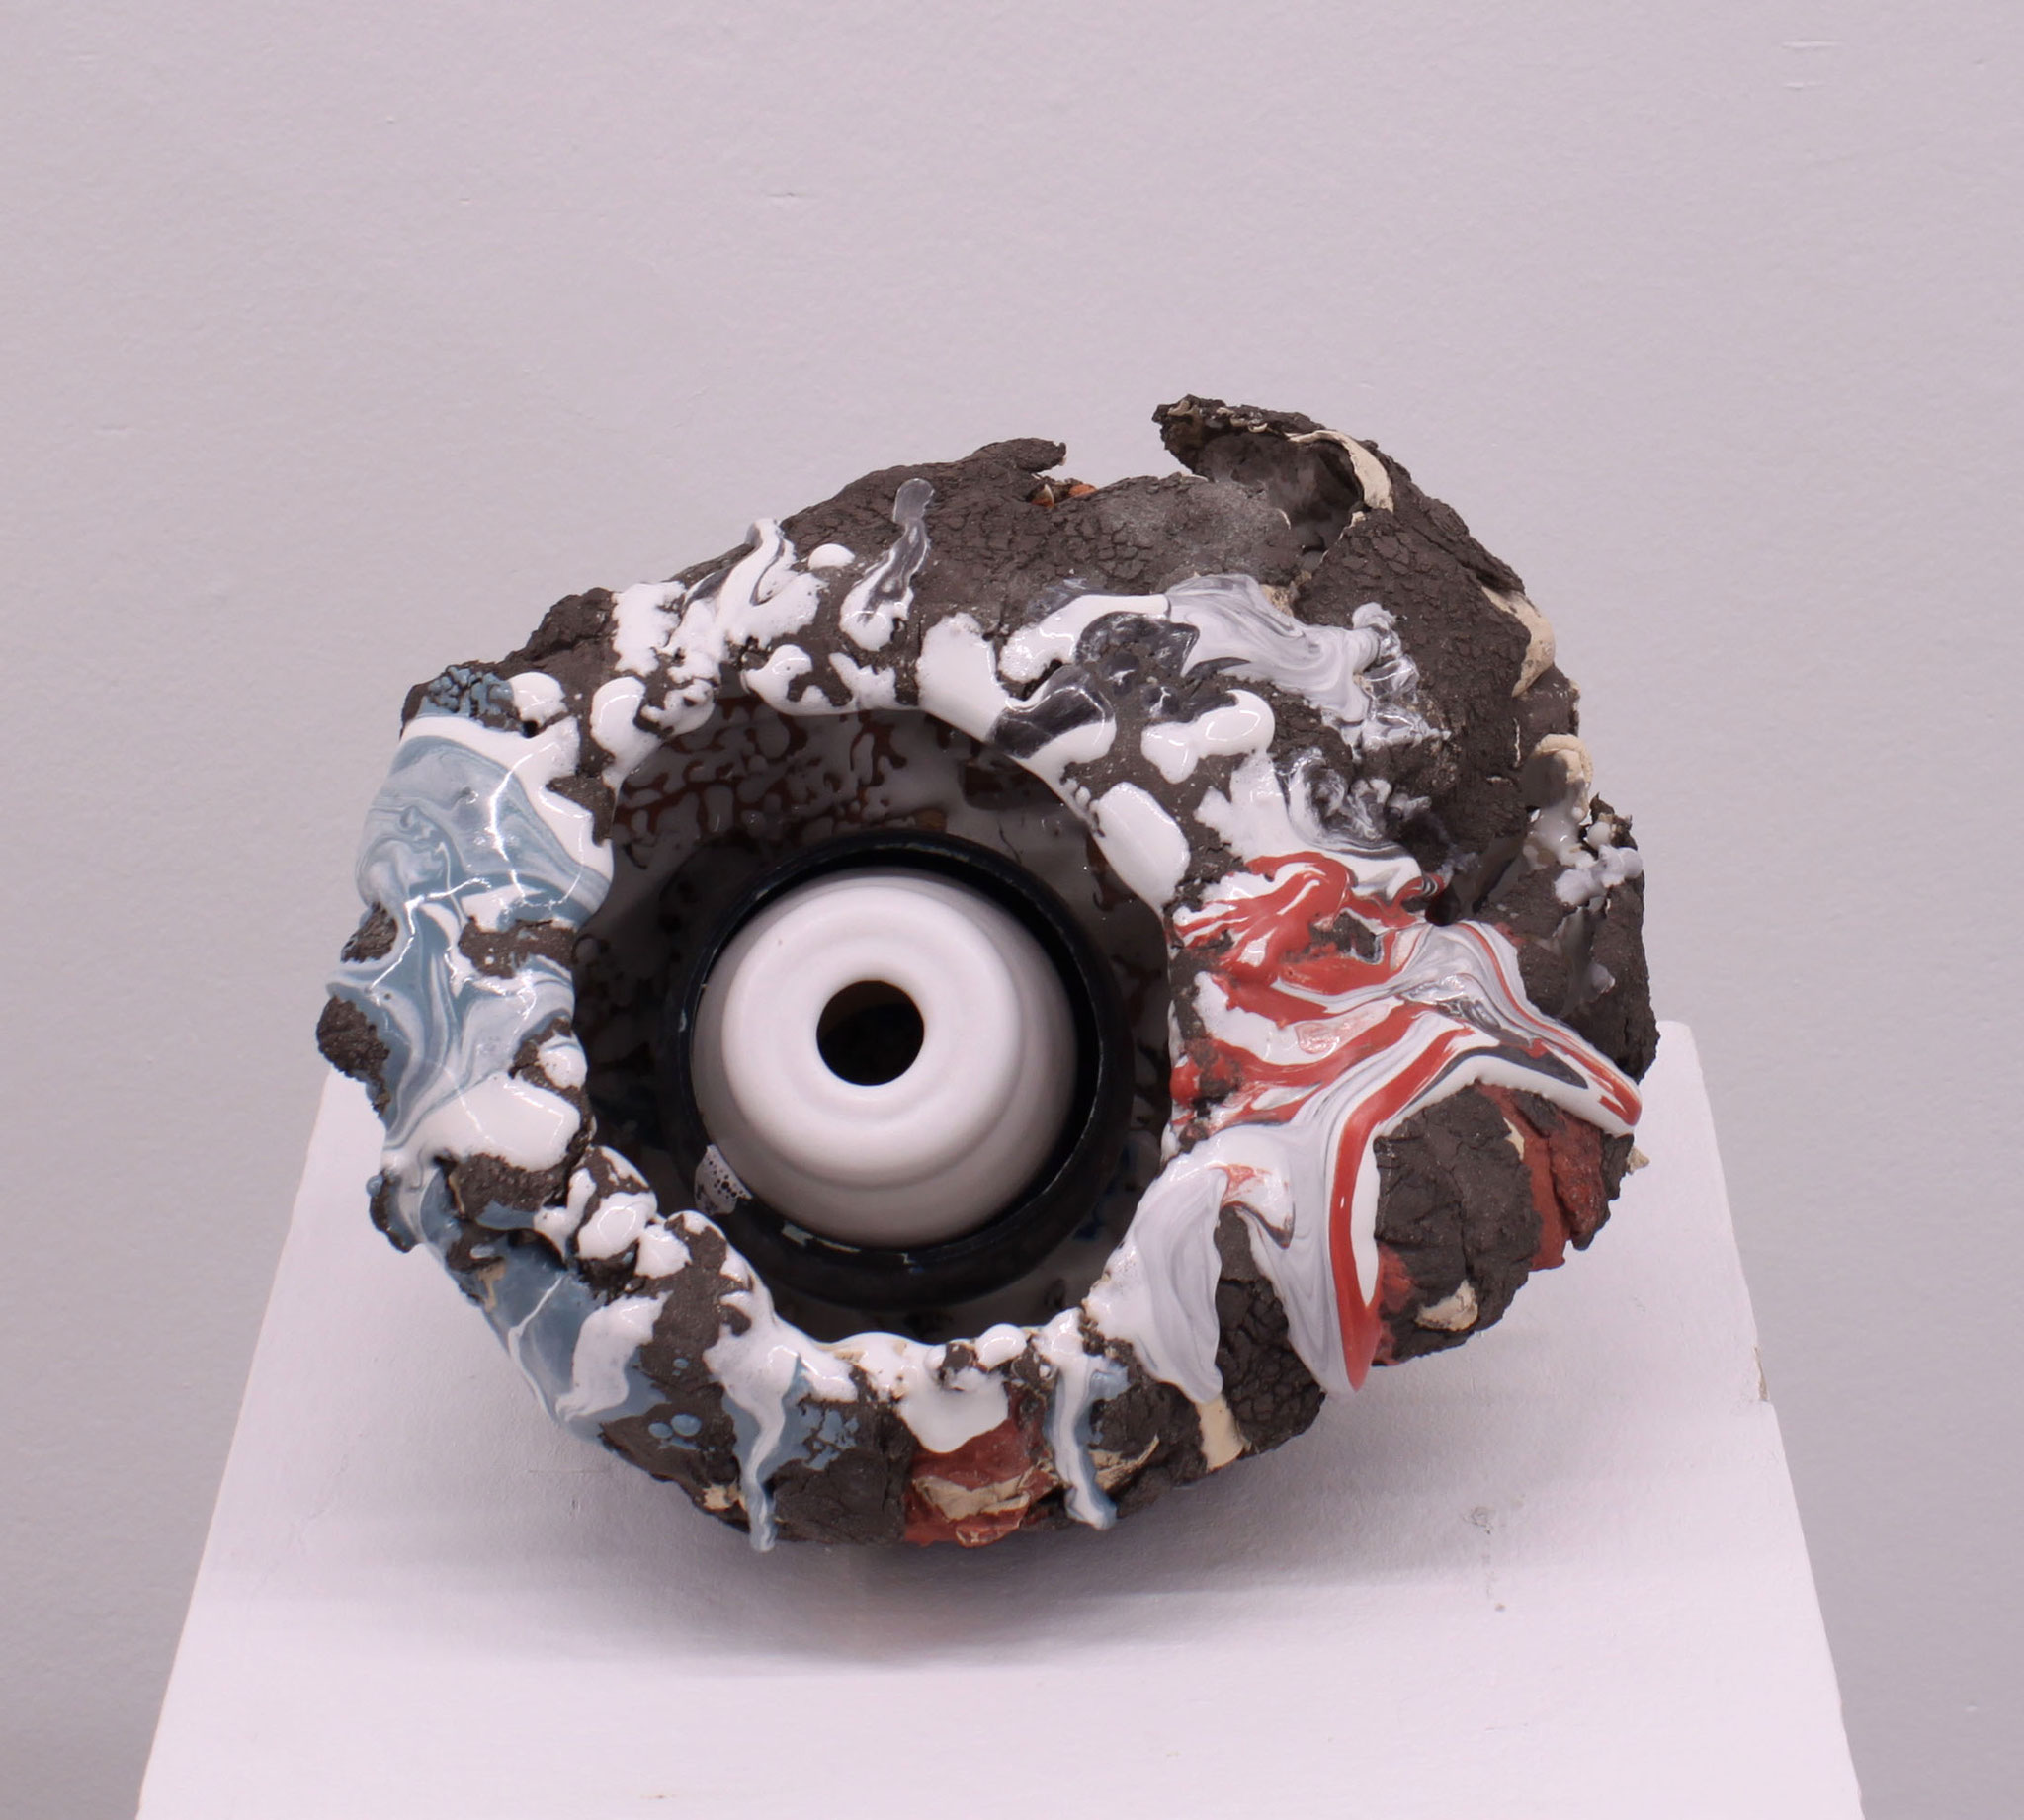 Thomas Marseiler, "Dental Eleven", Keramik glasiert, 45 x 30 cm